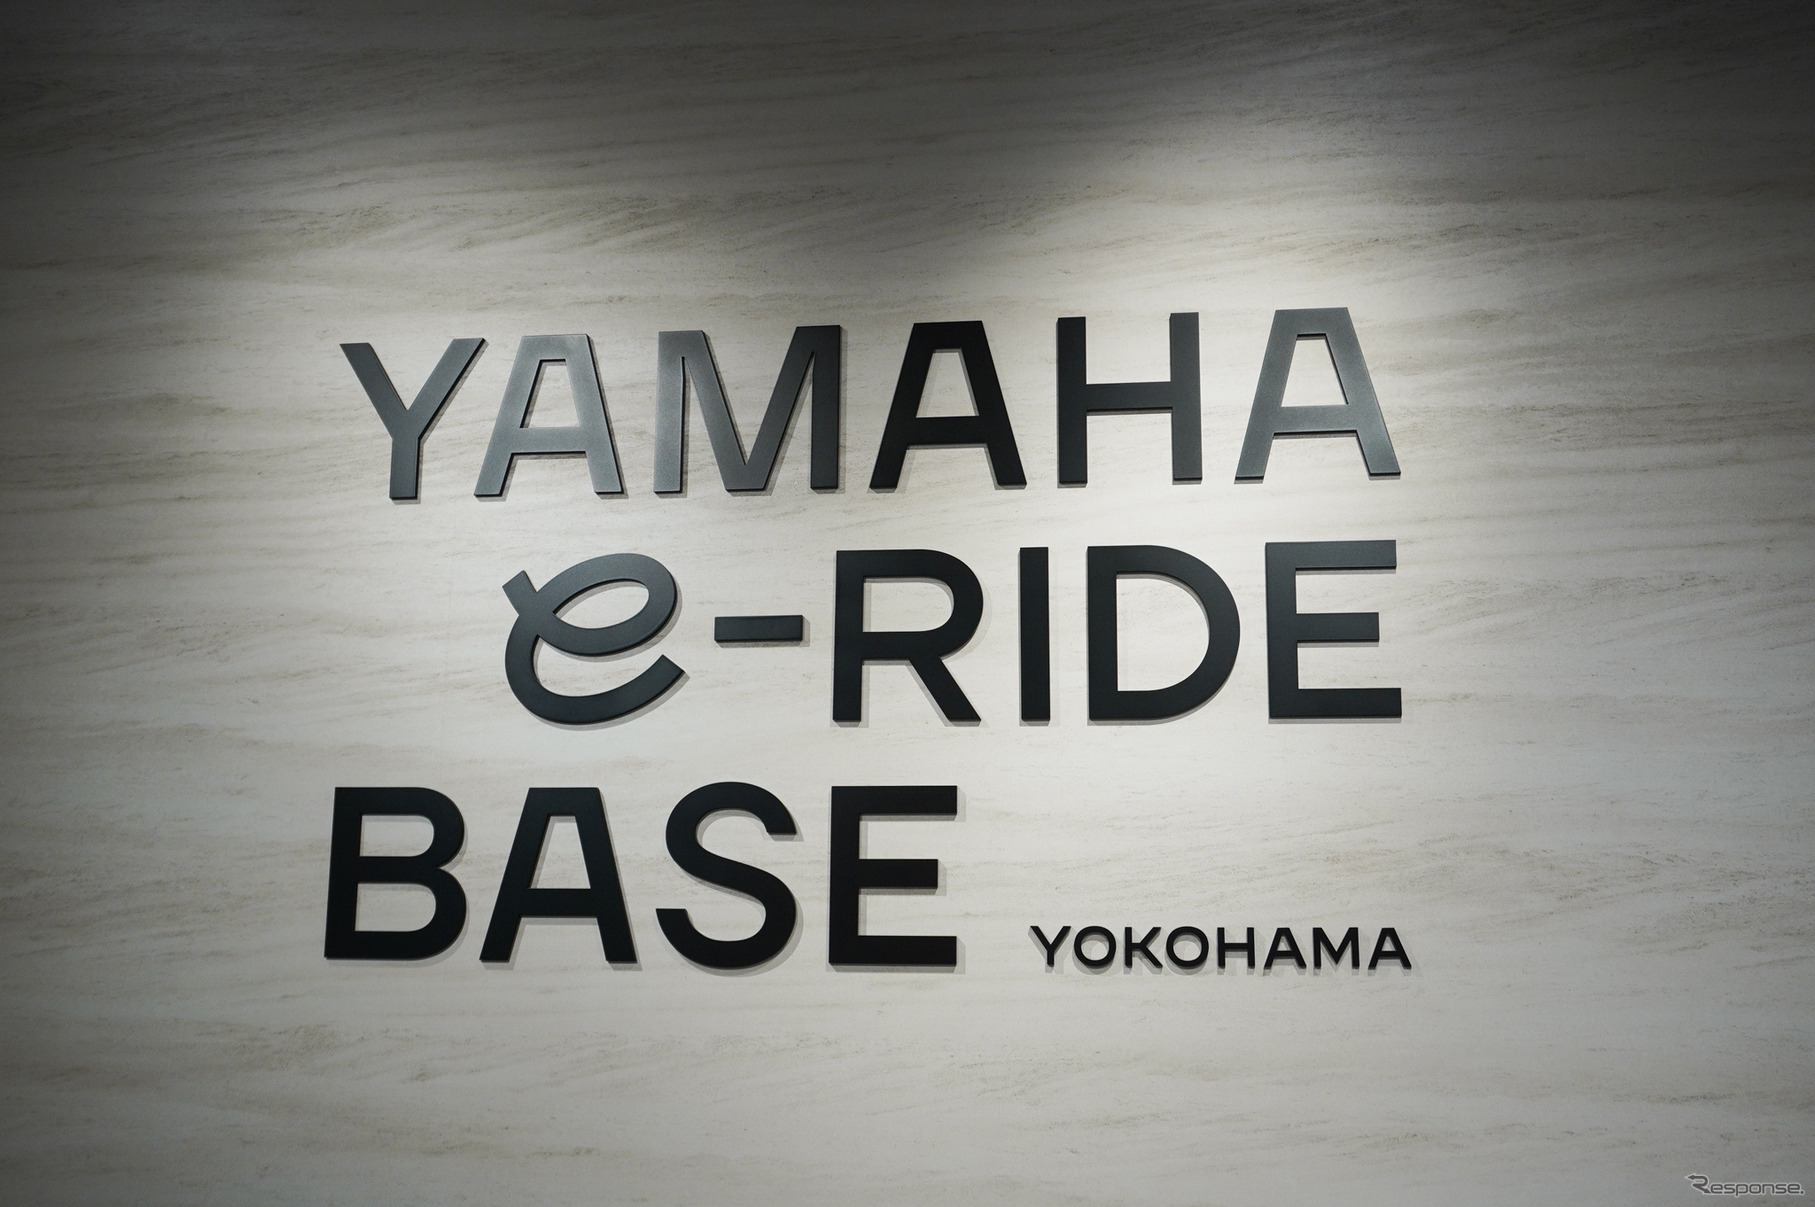 Yamaha E-Ride Base